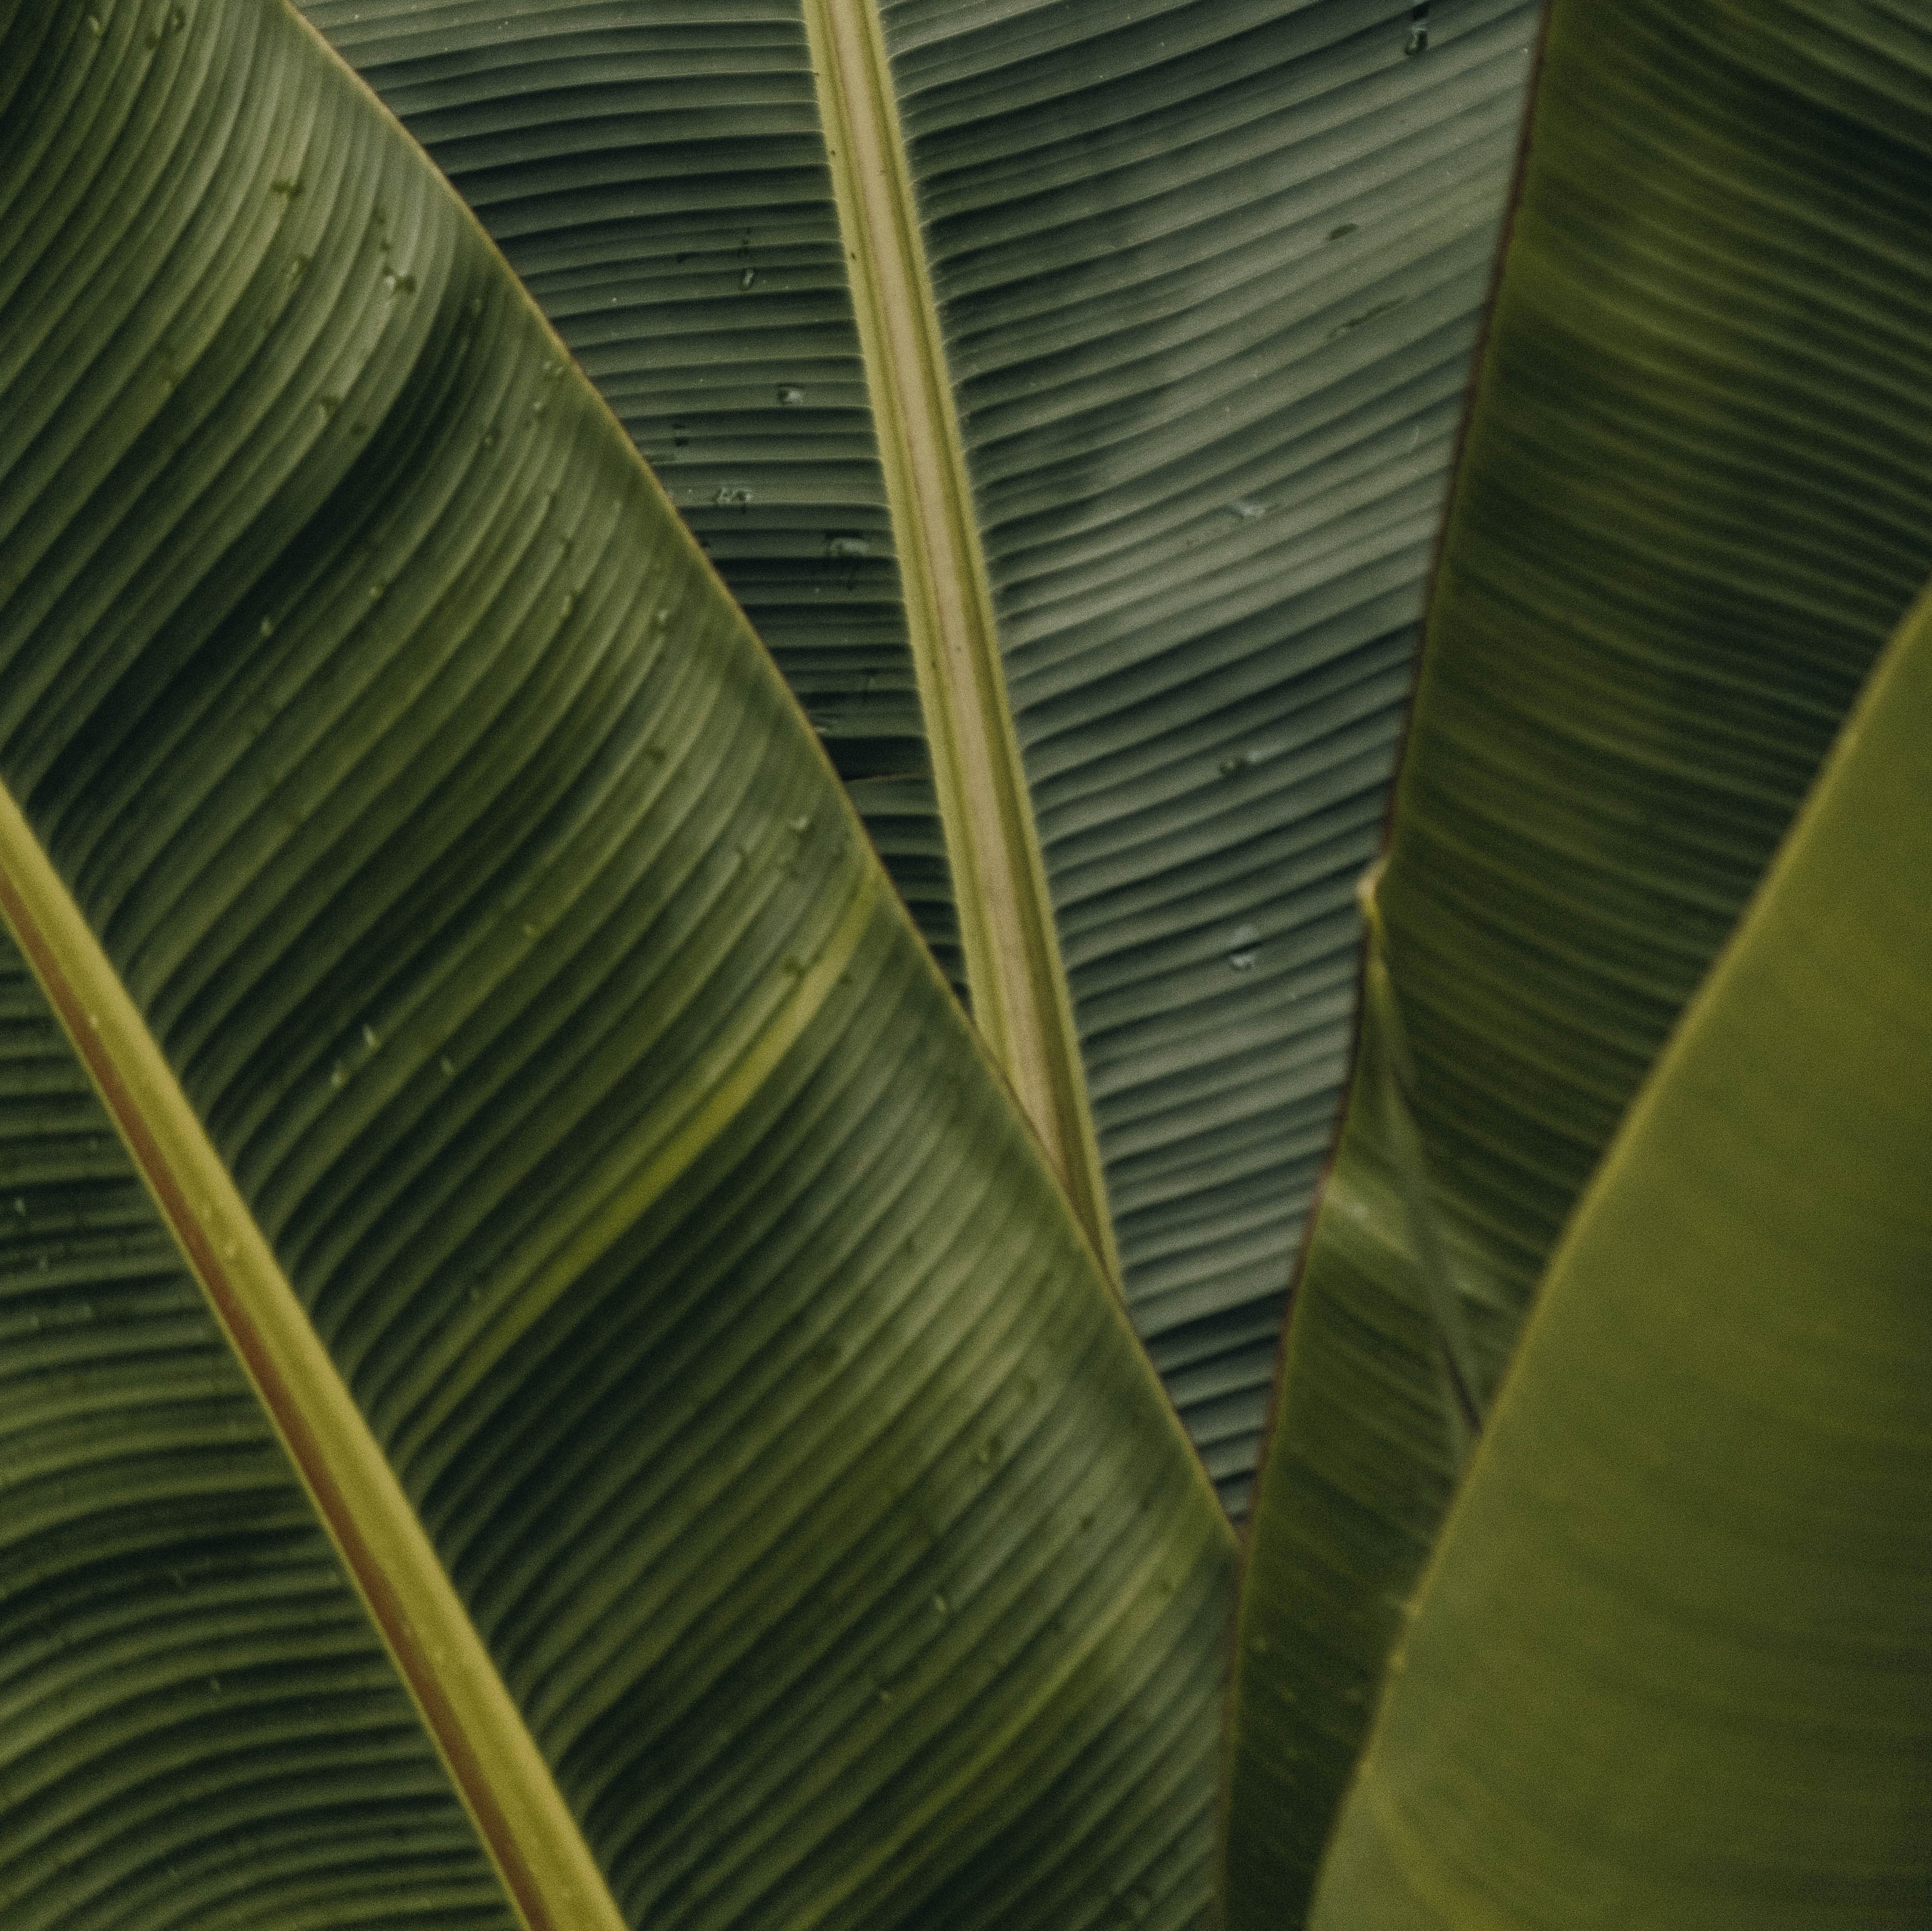 A closeup of banana leaves